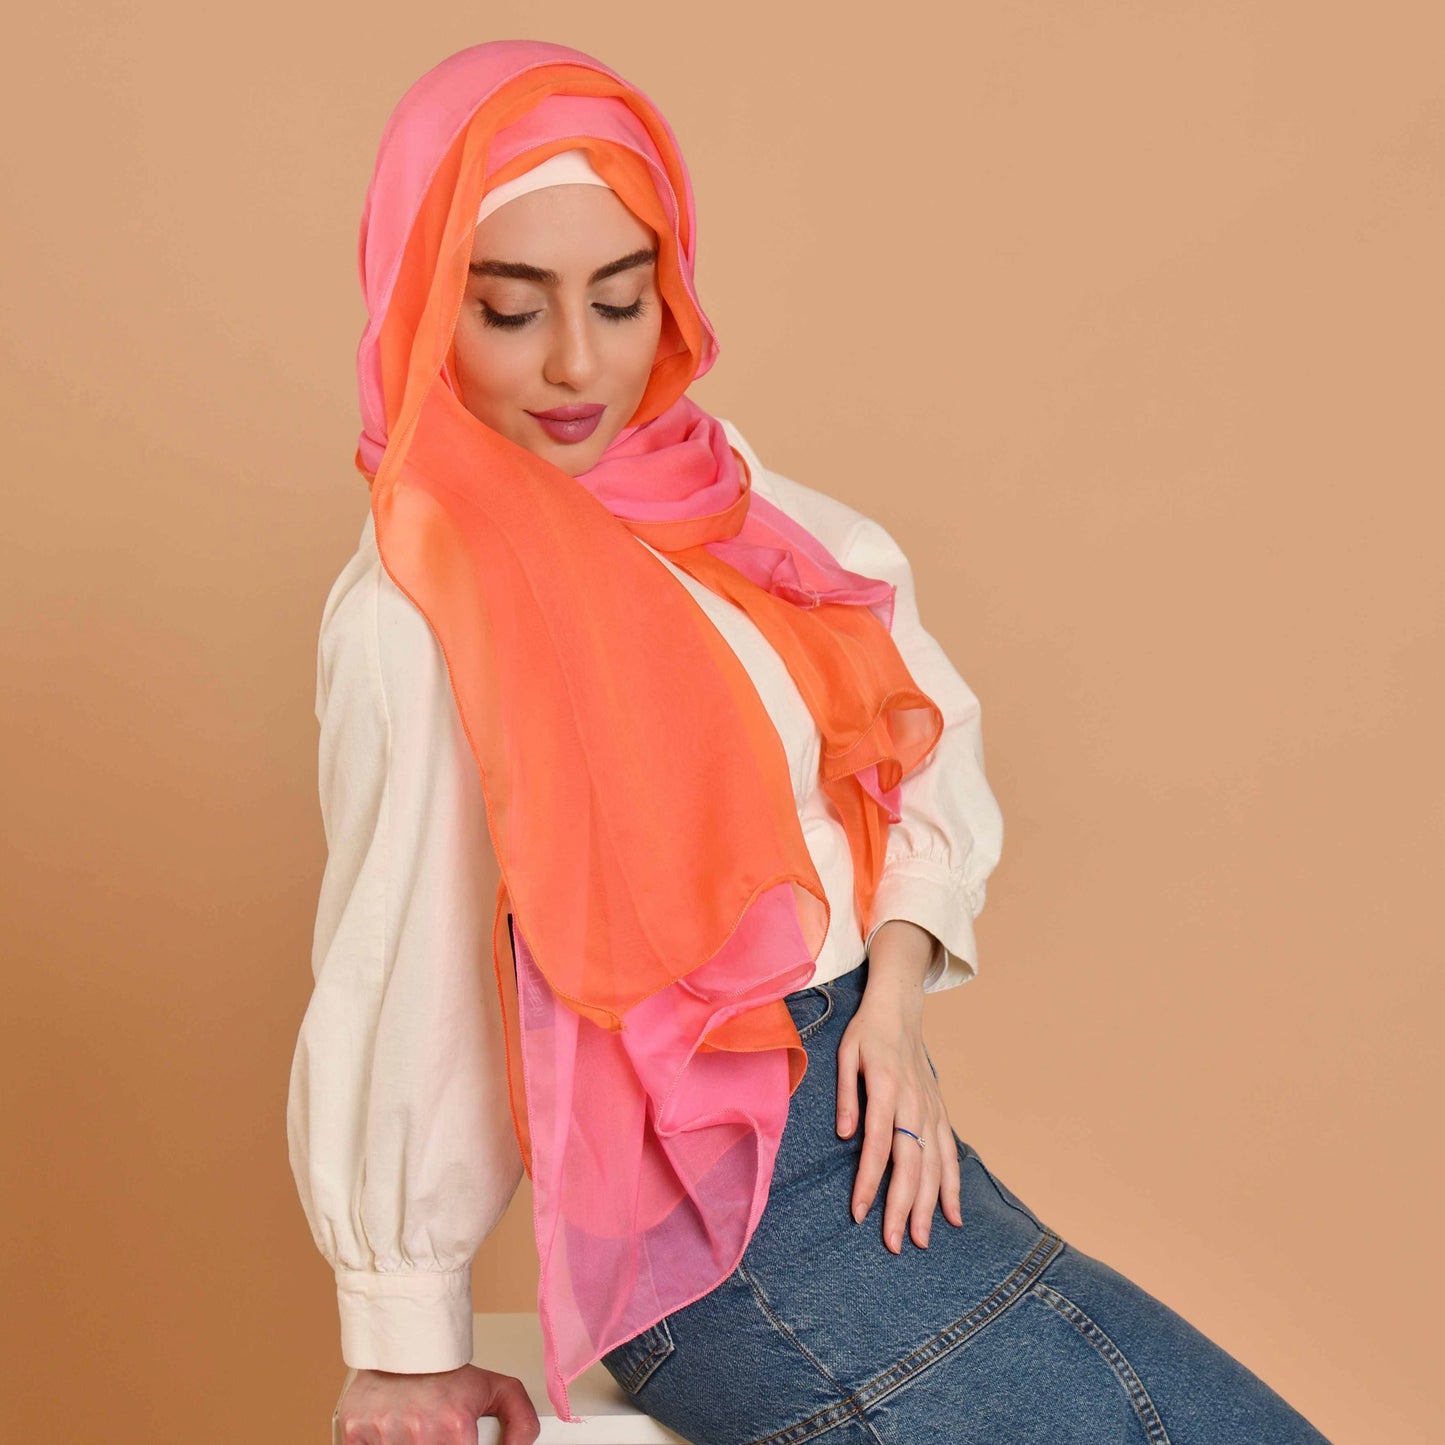 à la Leen double-layered two-tone silk scarf in  neon orange and bubblegum pink